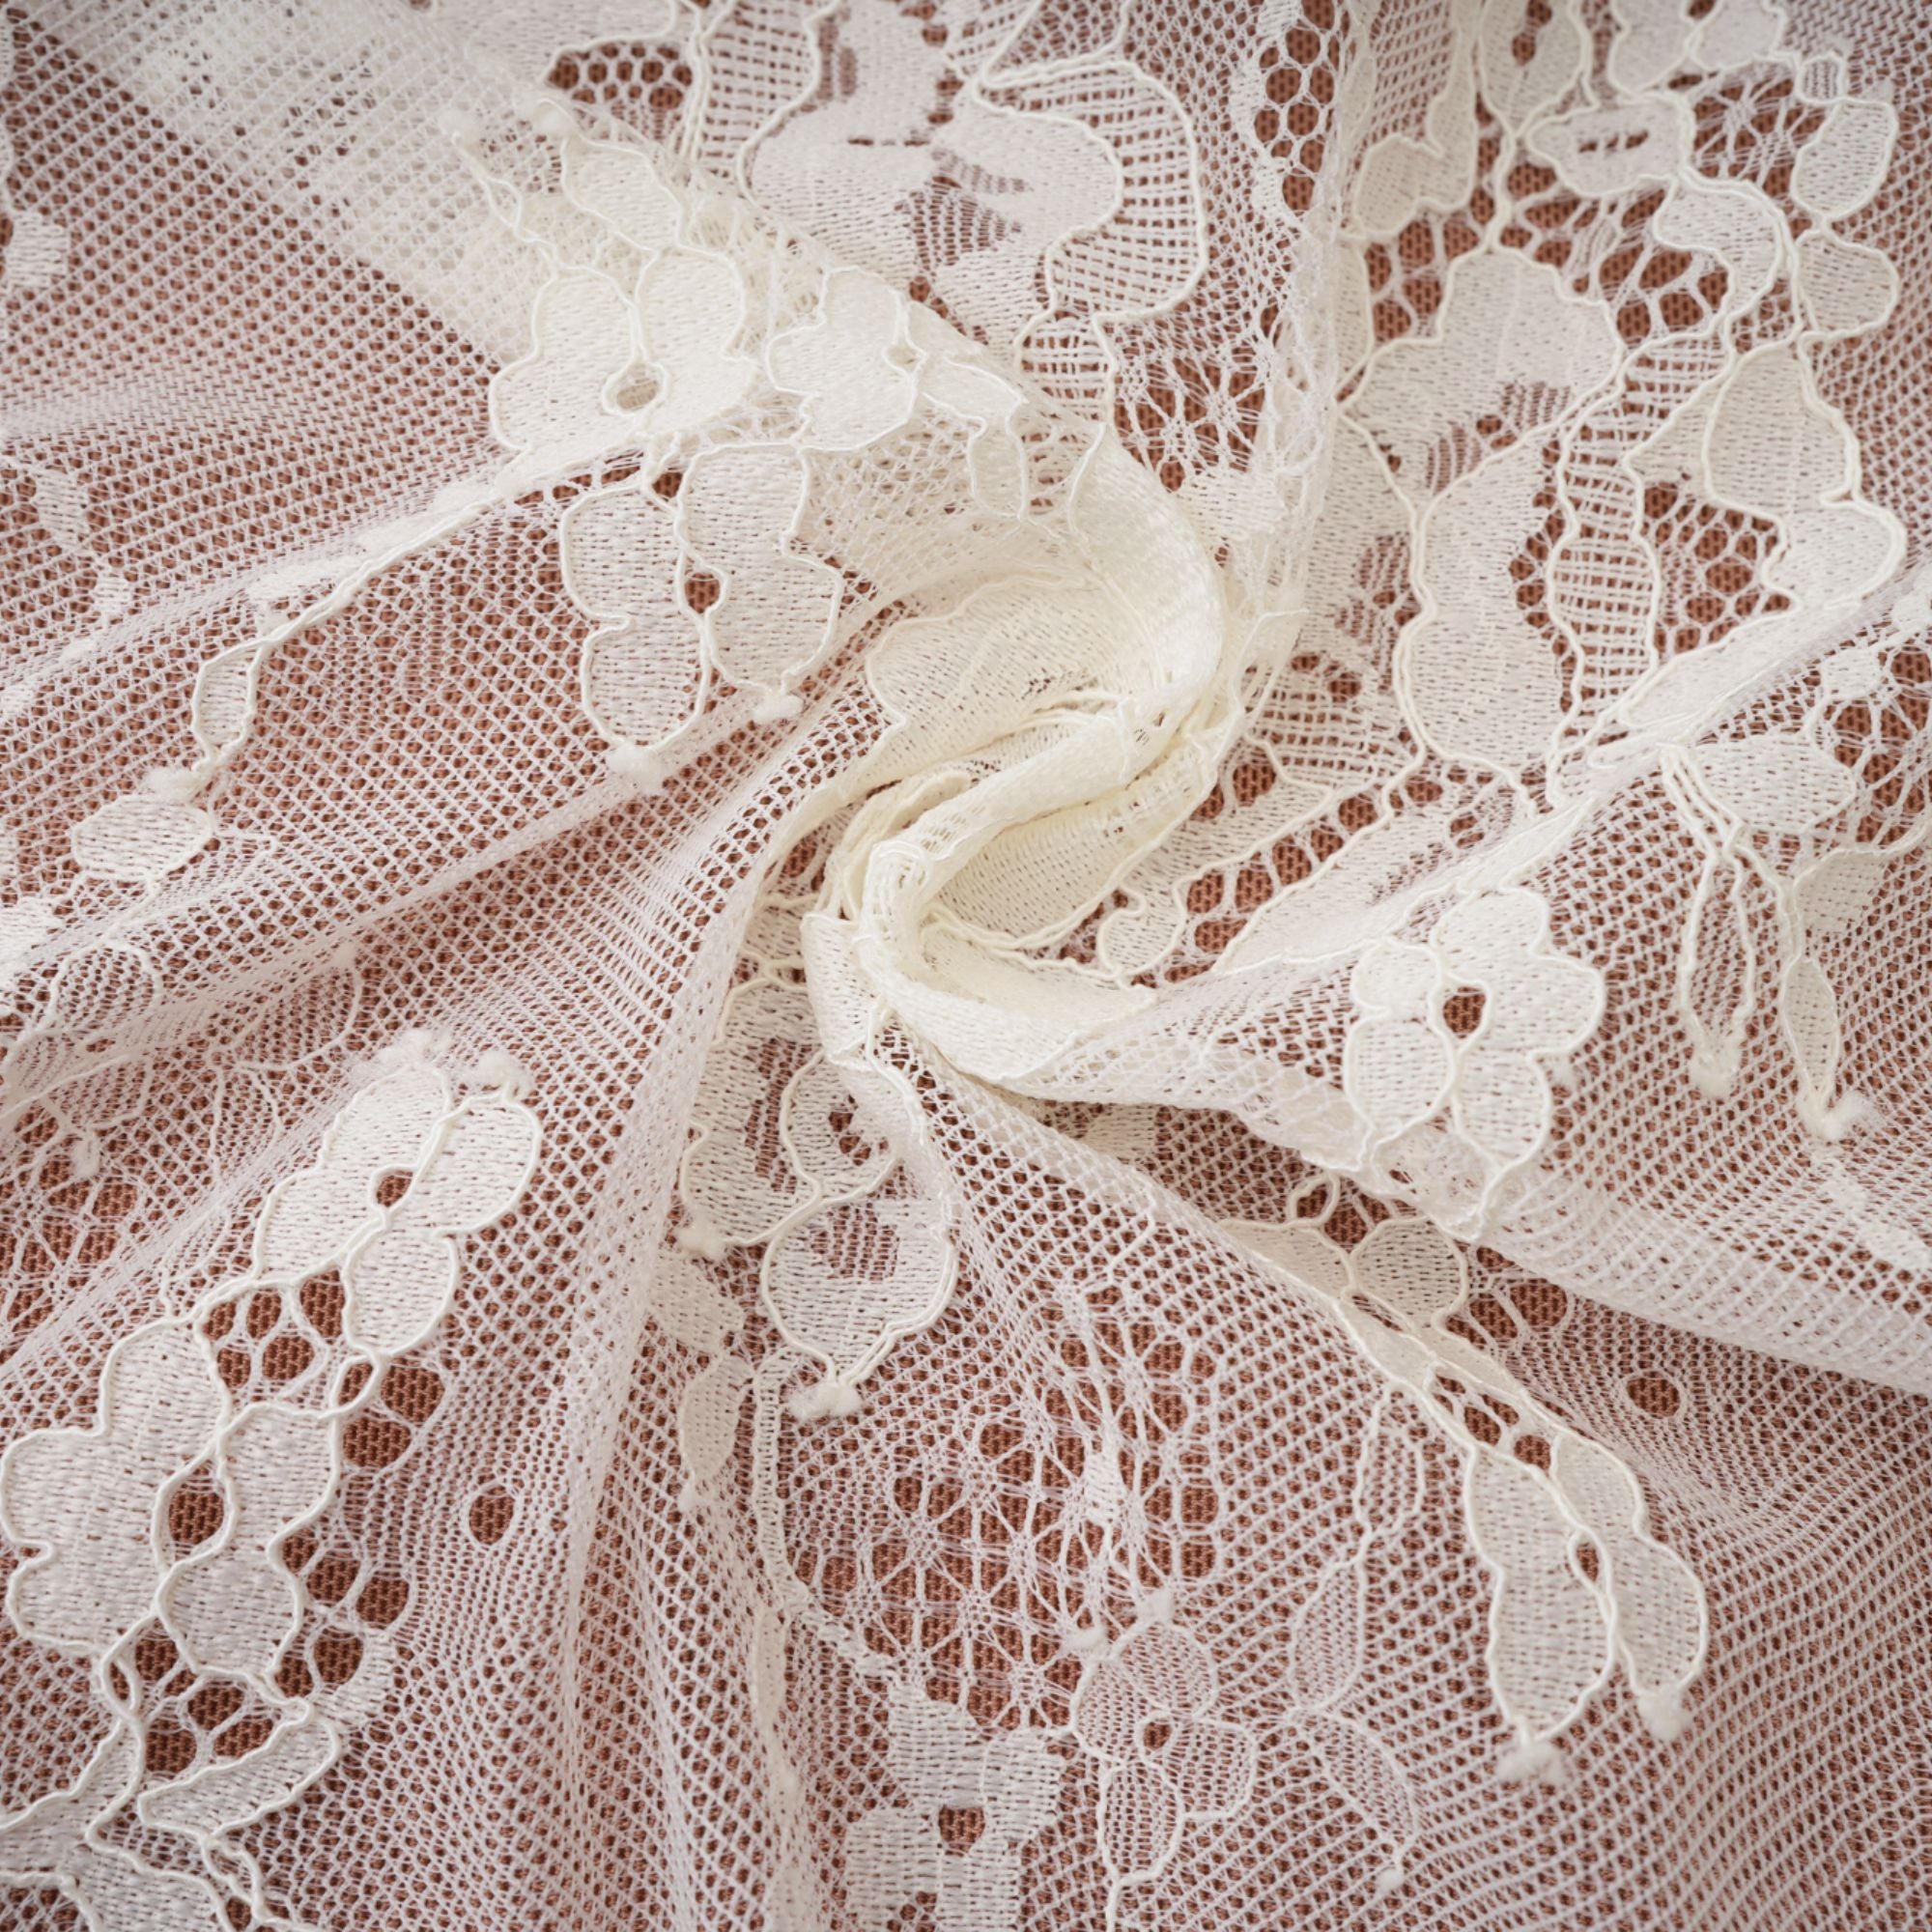 Valérie white lace maxi dress